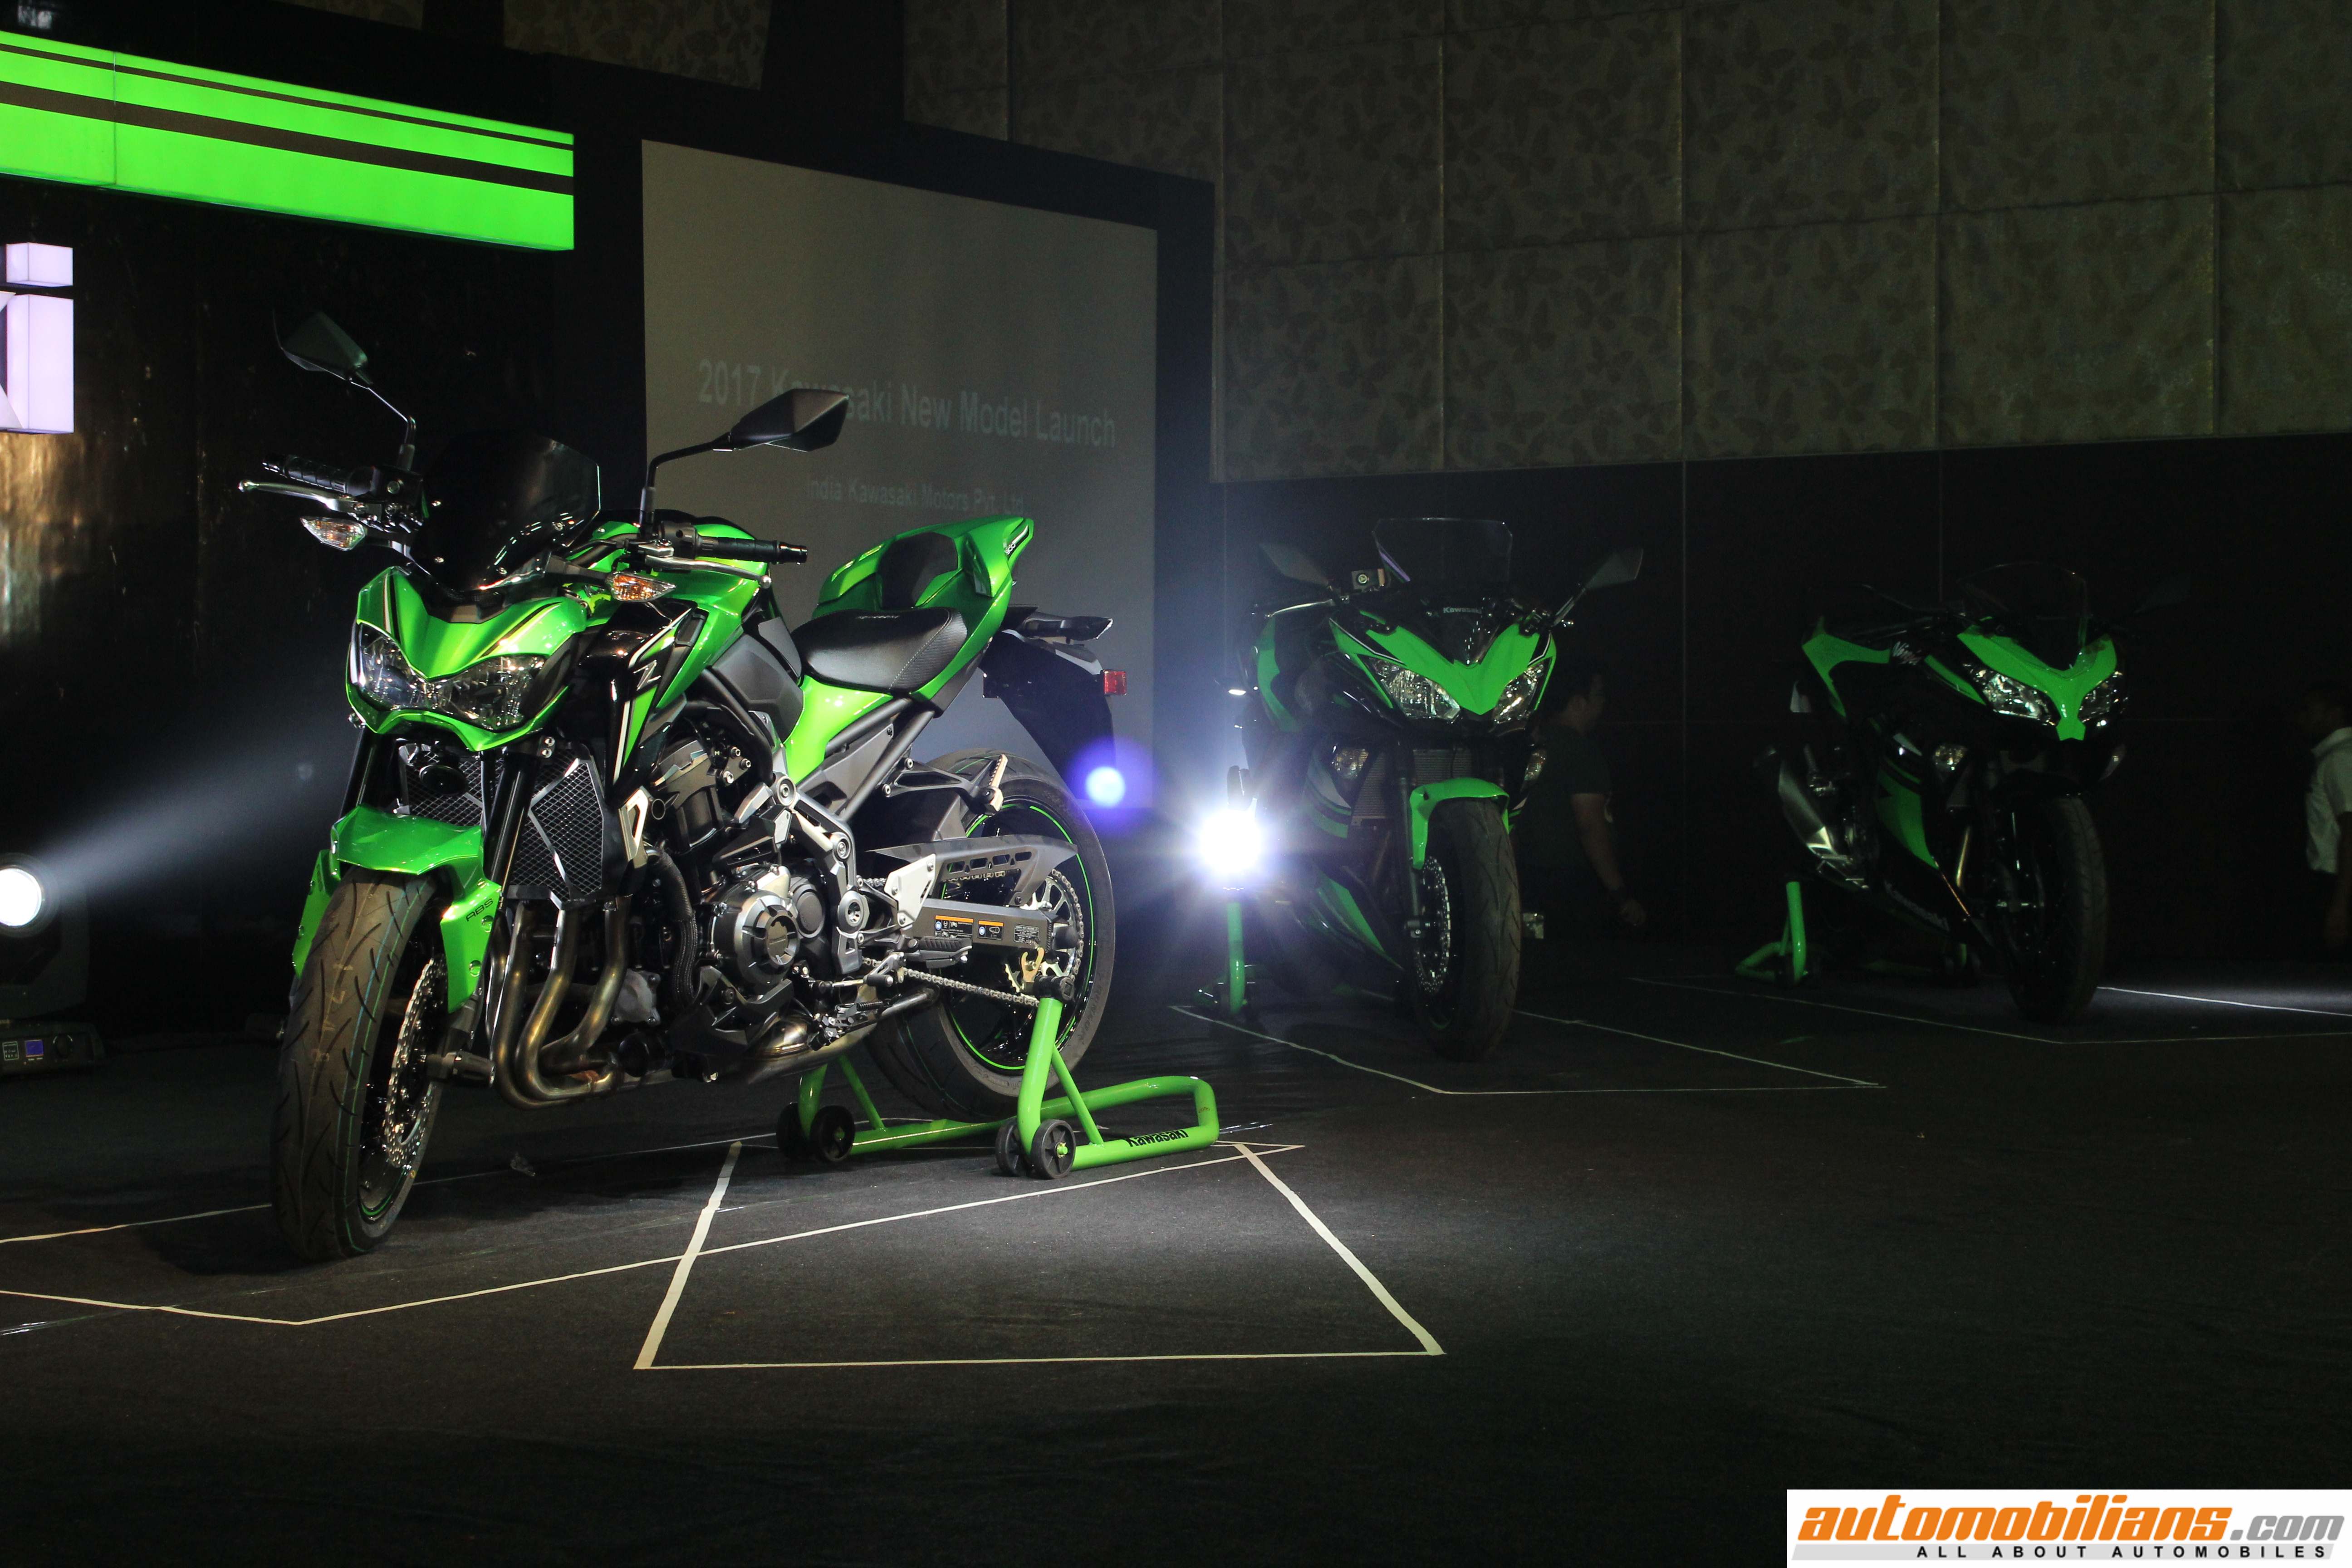 2017 Kawasaki Ninja 300, Ninja 650, Versys 650, Z650 and Z900 Launched In India